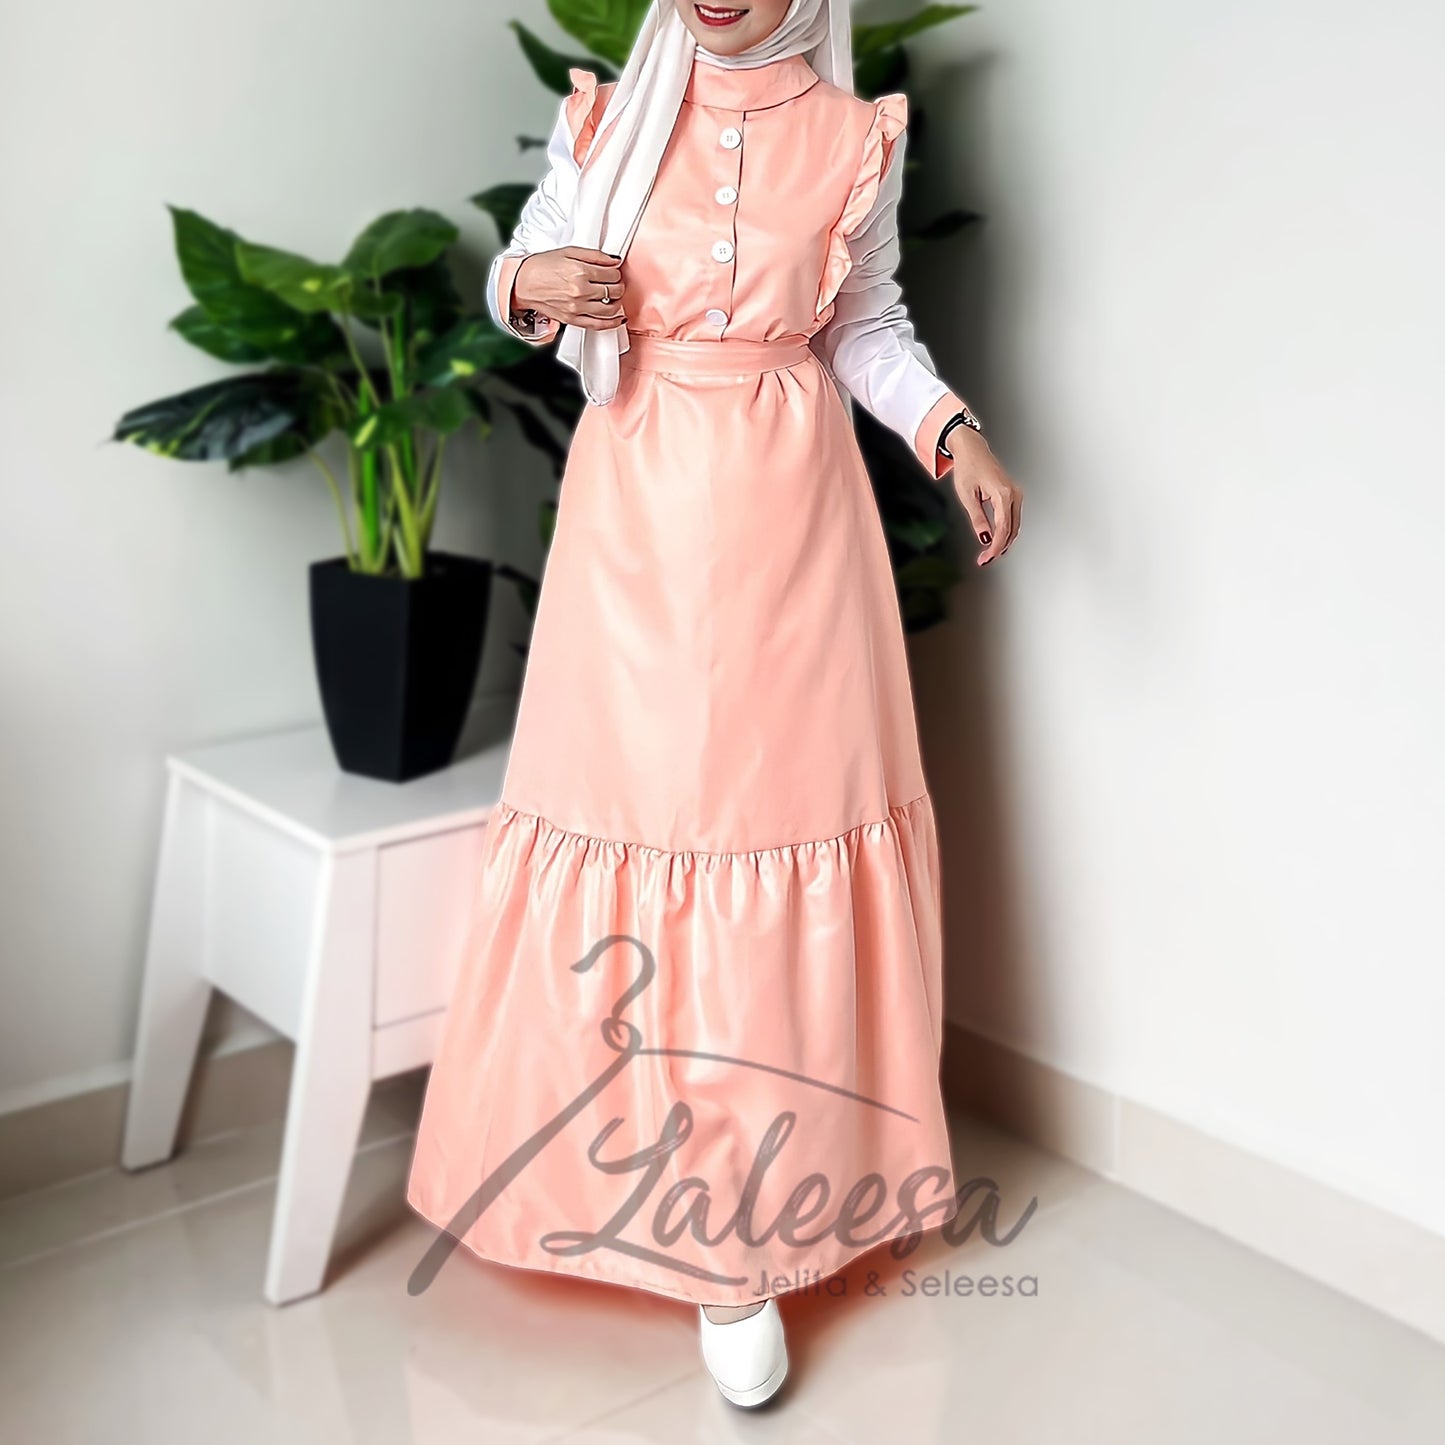 LALEESA DRESS BABY PRINCESS LD210200 <Korean Series> Dress Muslimah Dress Women Dress Jubah Muslimah Jubah Abaya Dress